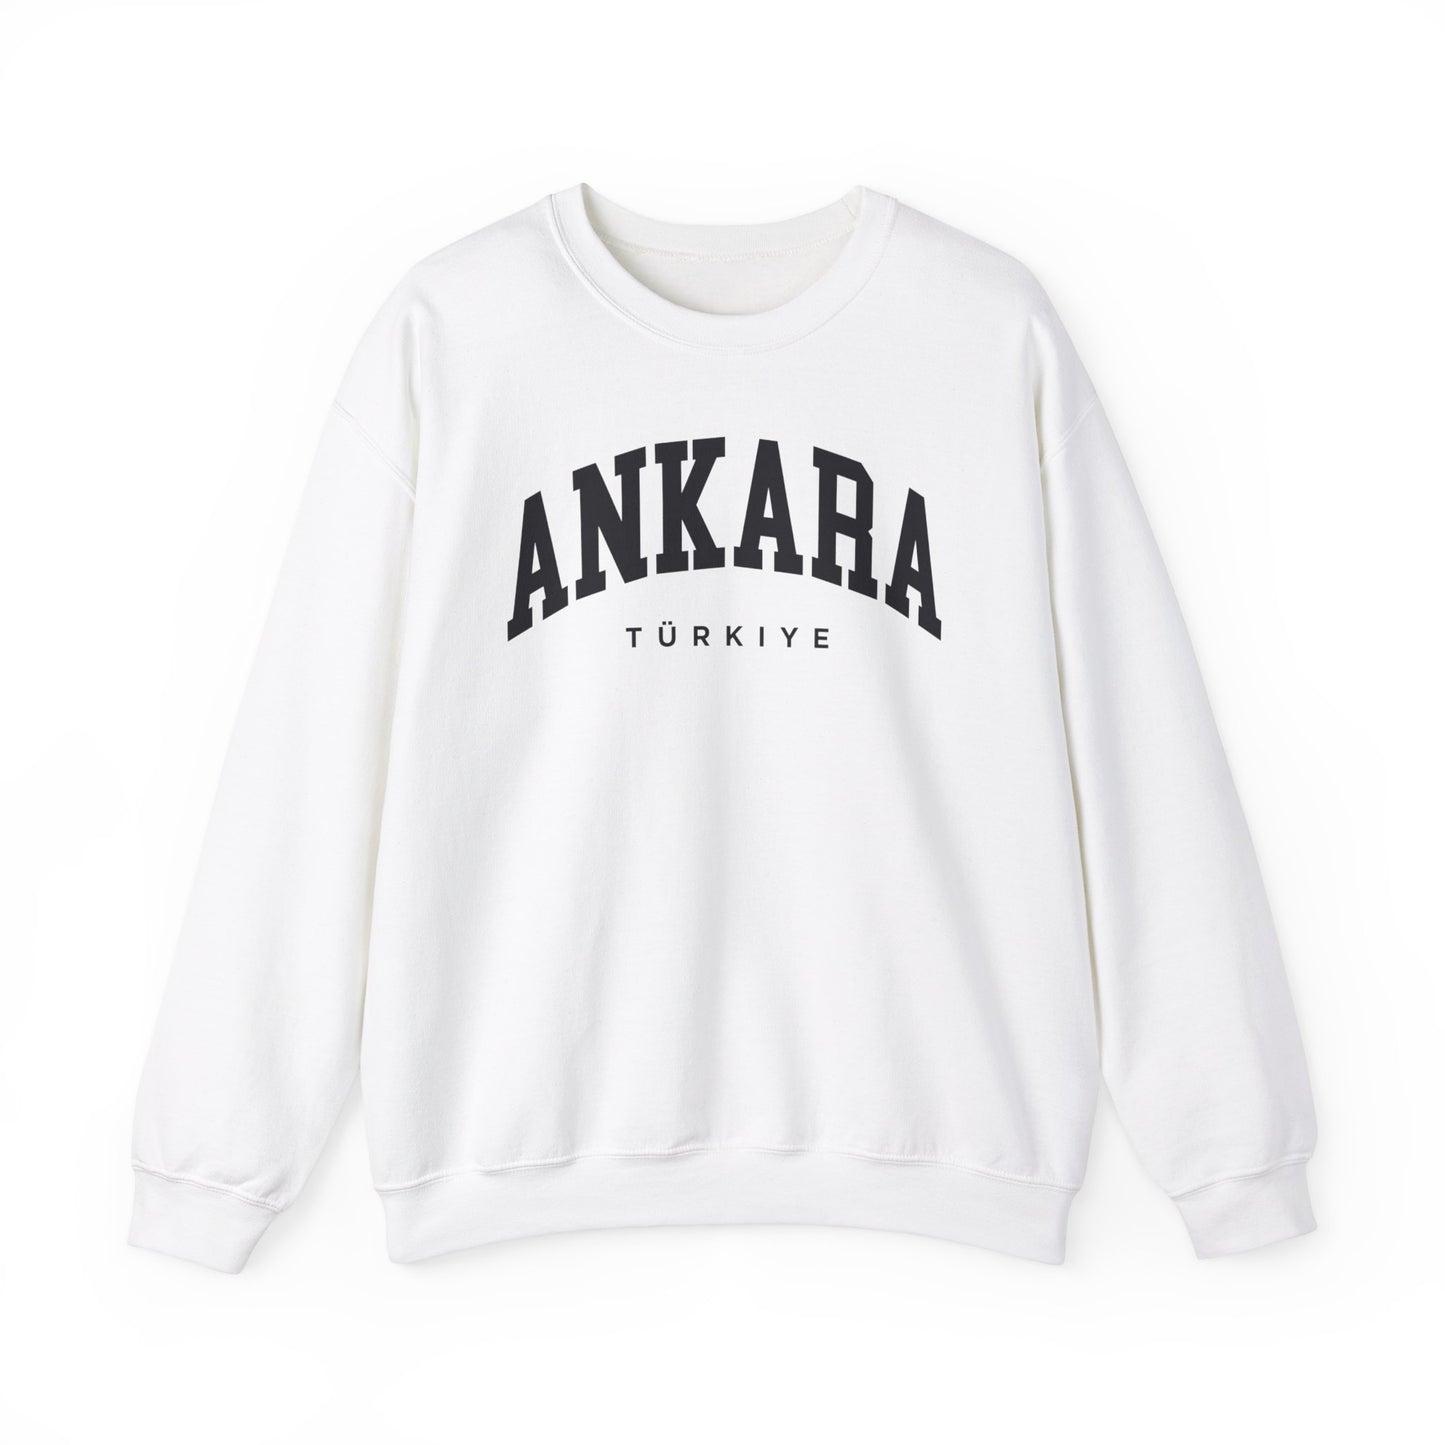 Ankara Turkey Sweatshirt